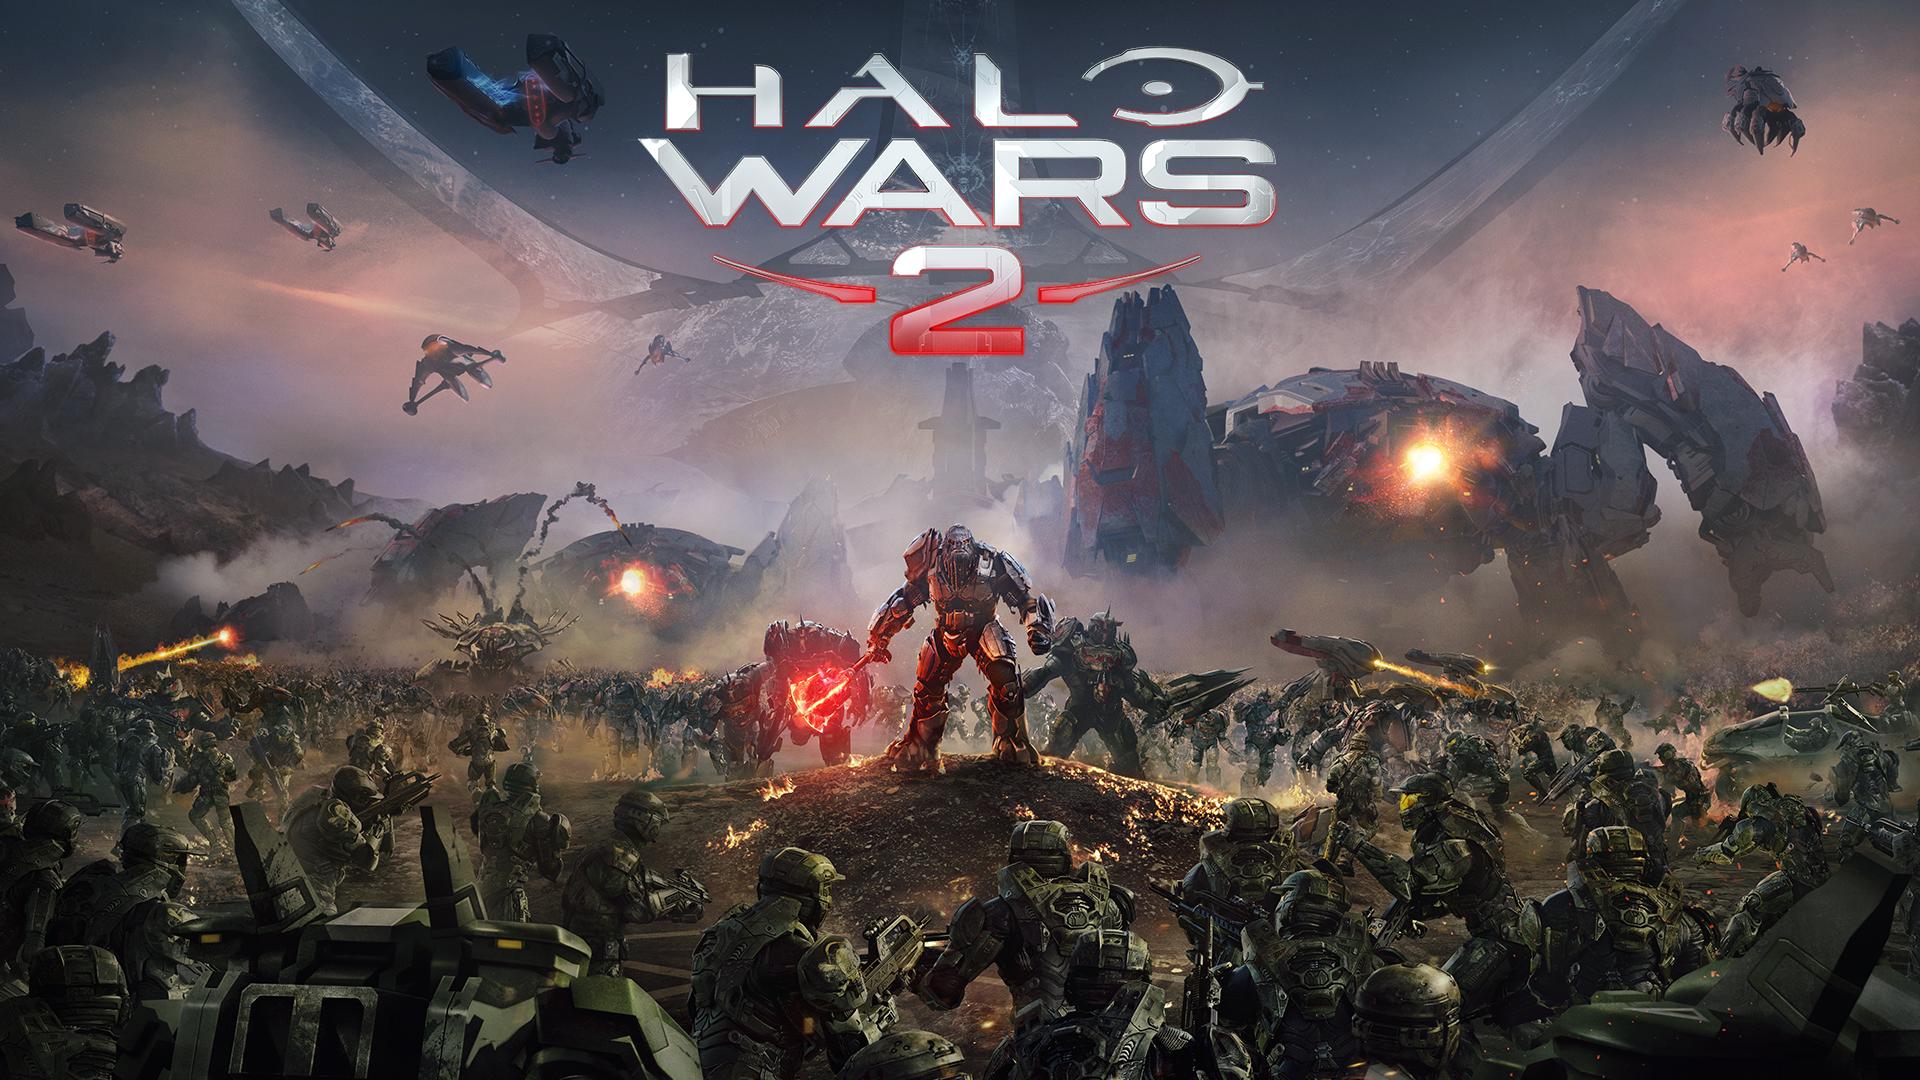 Recensione del gioco Halo Wars 2